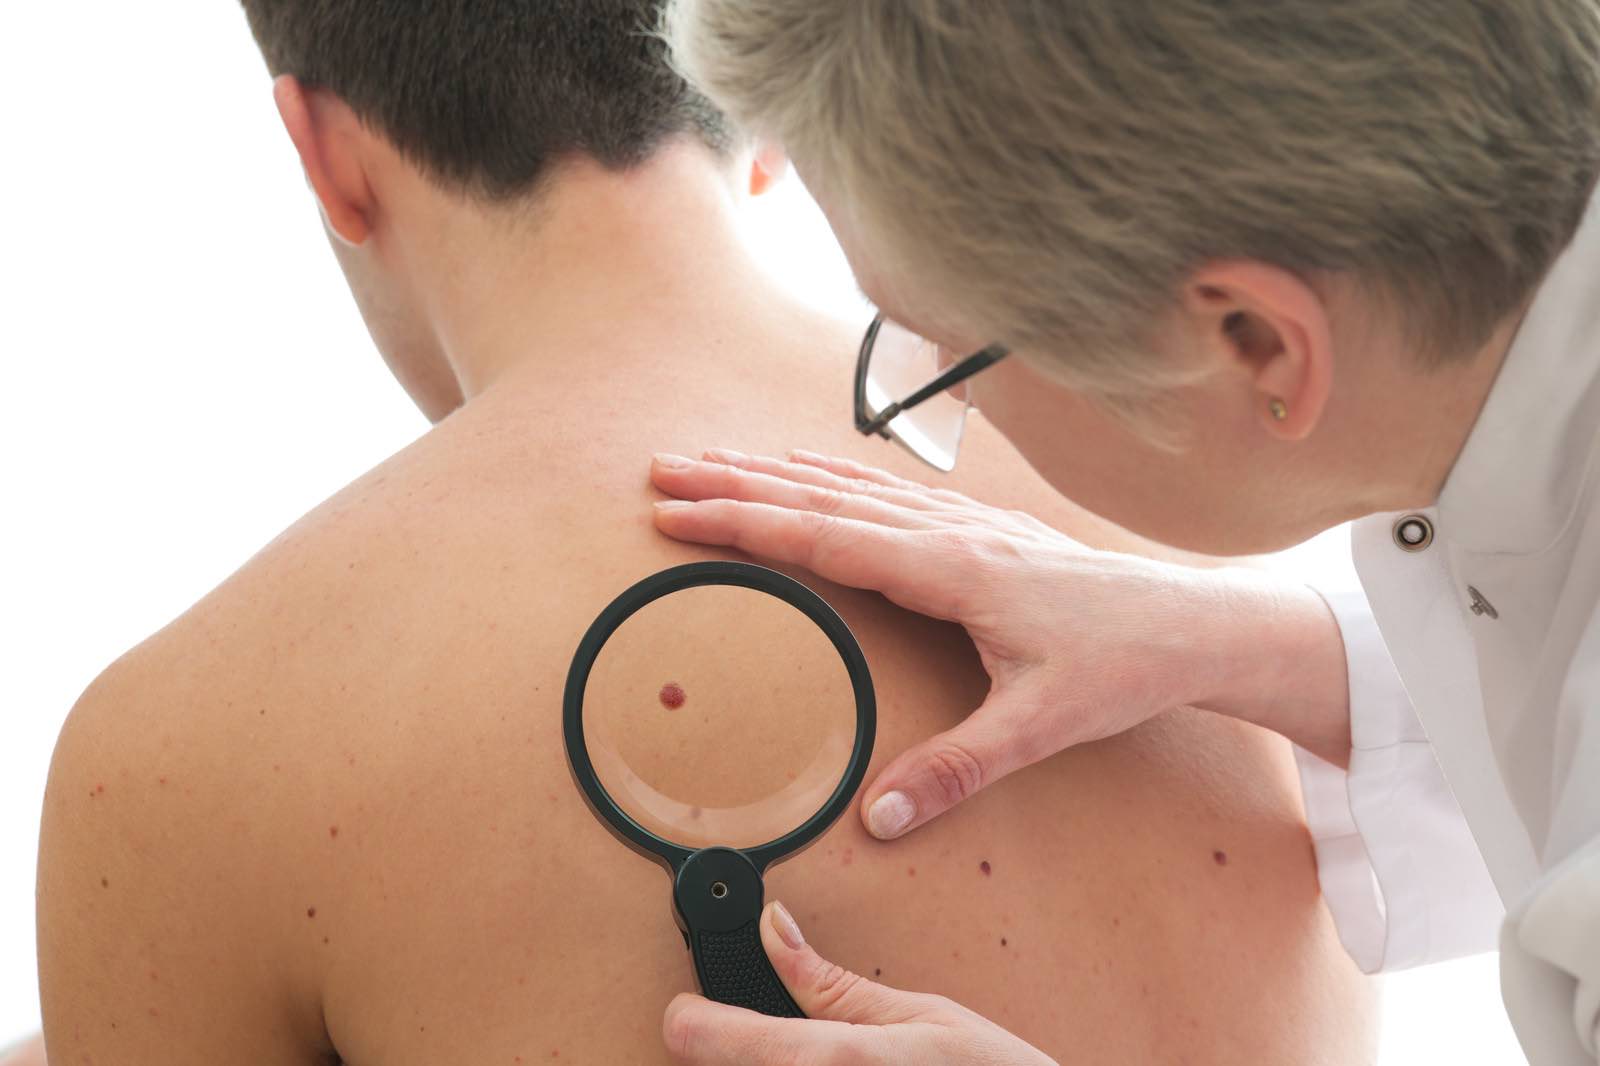 skin cancer checkup